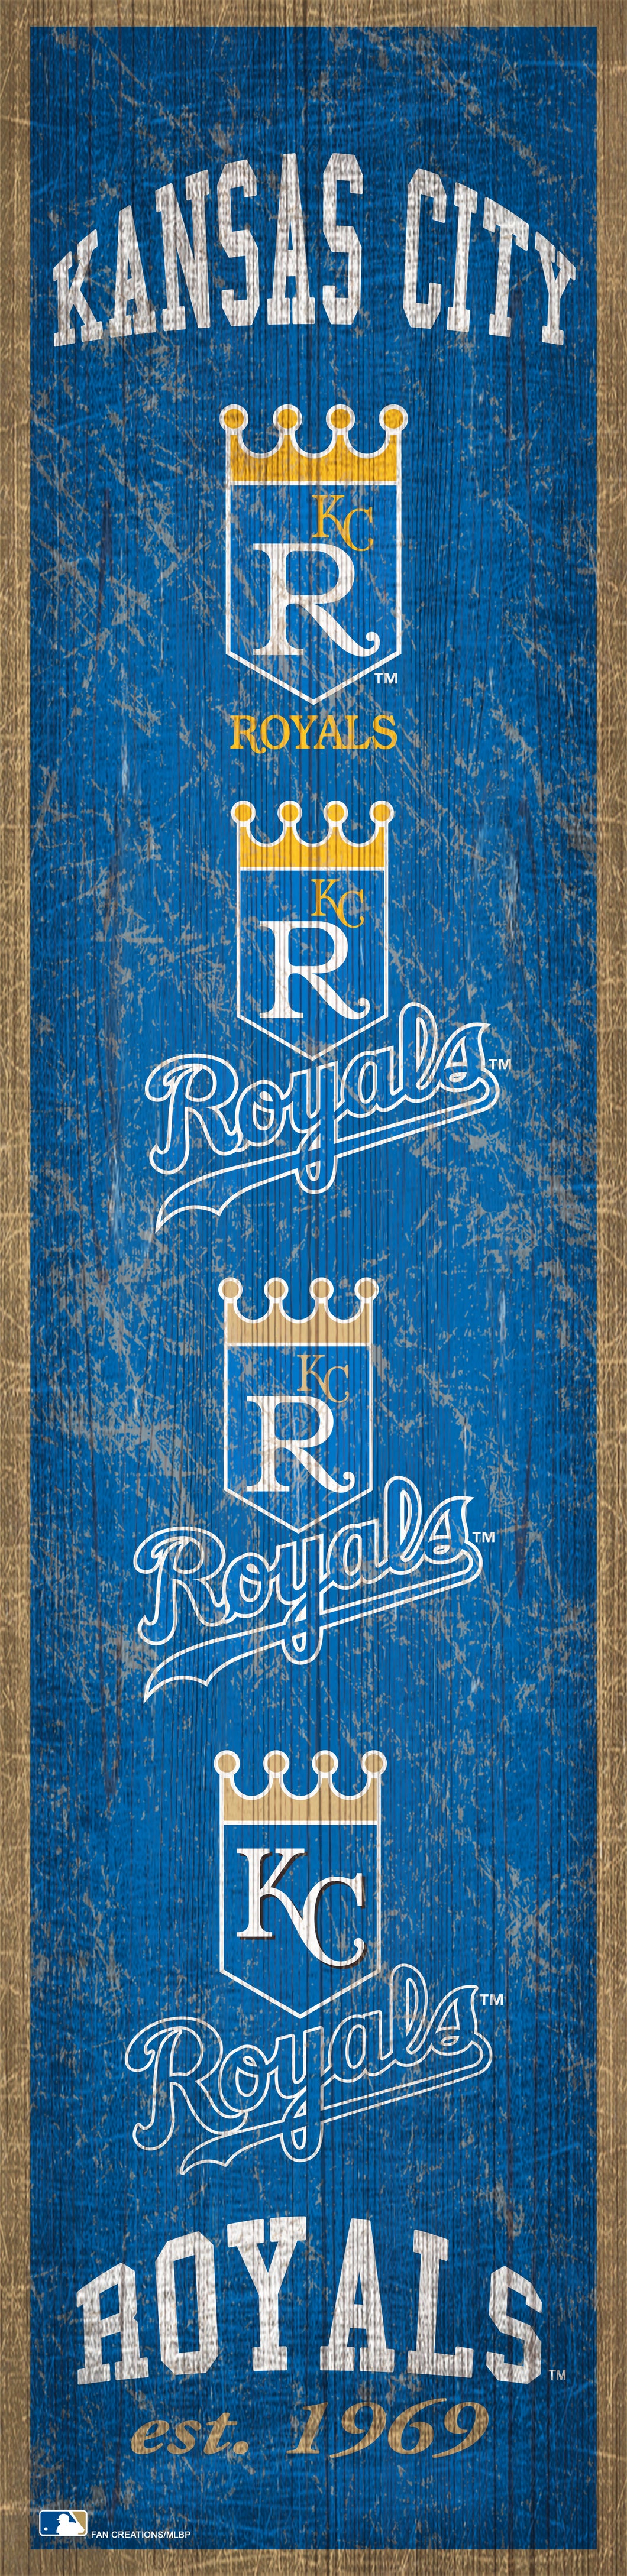 Kansas City Royals Heritage Banner Wood Sign - 6